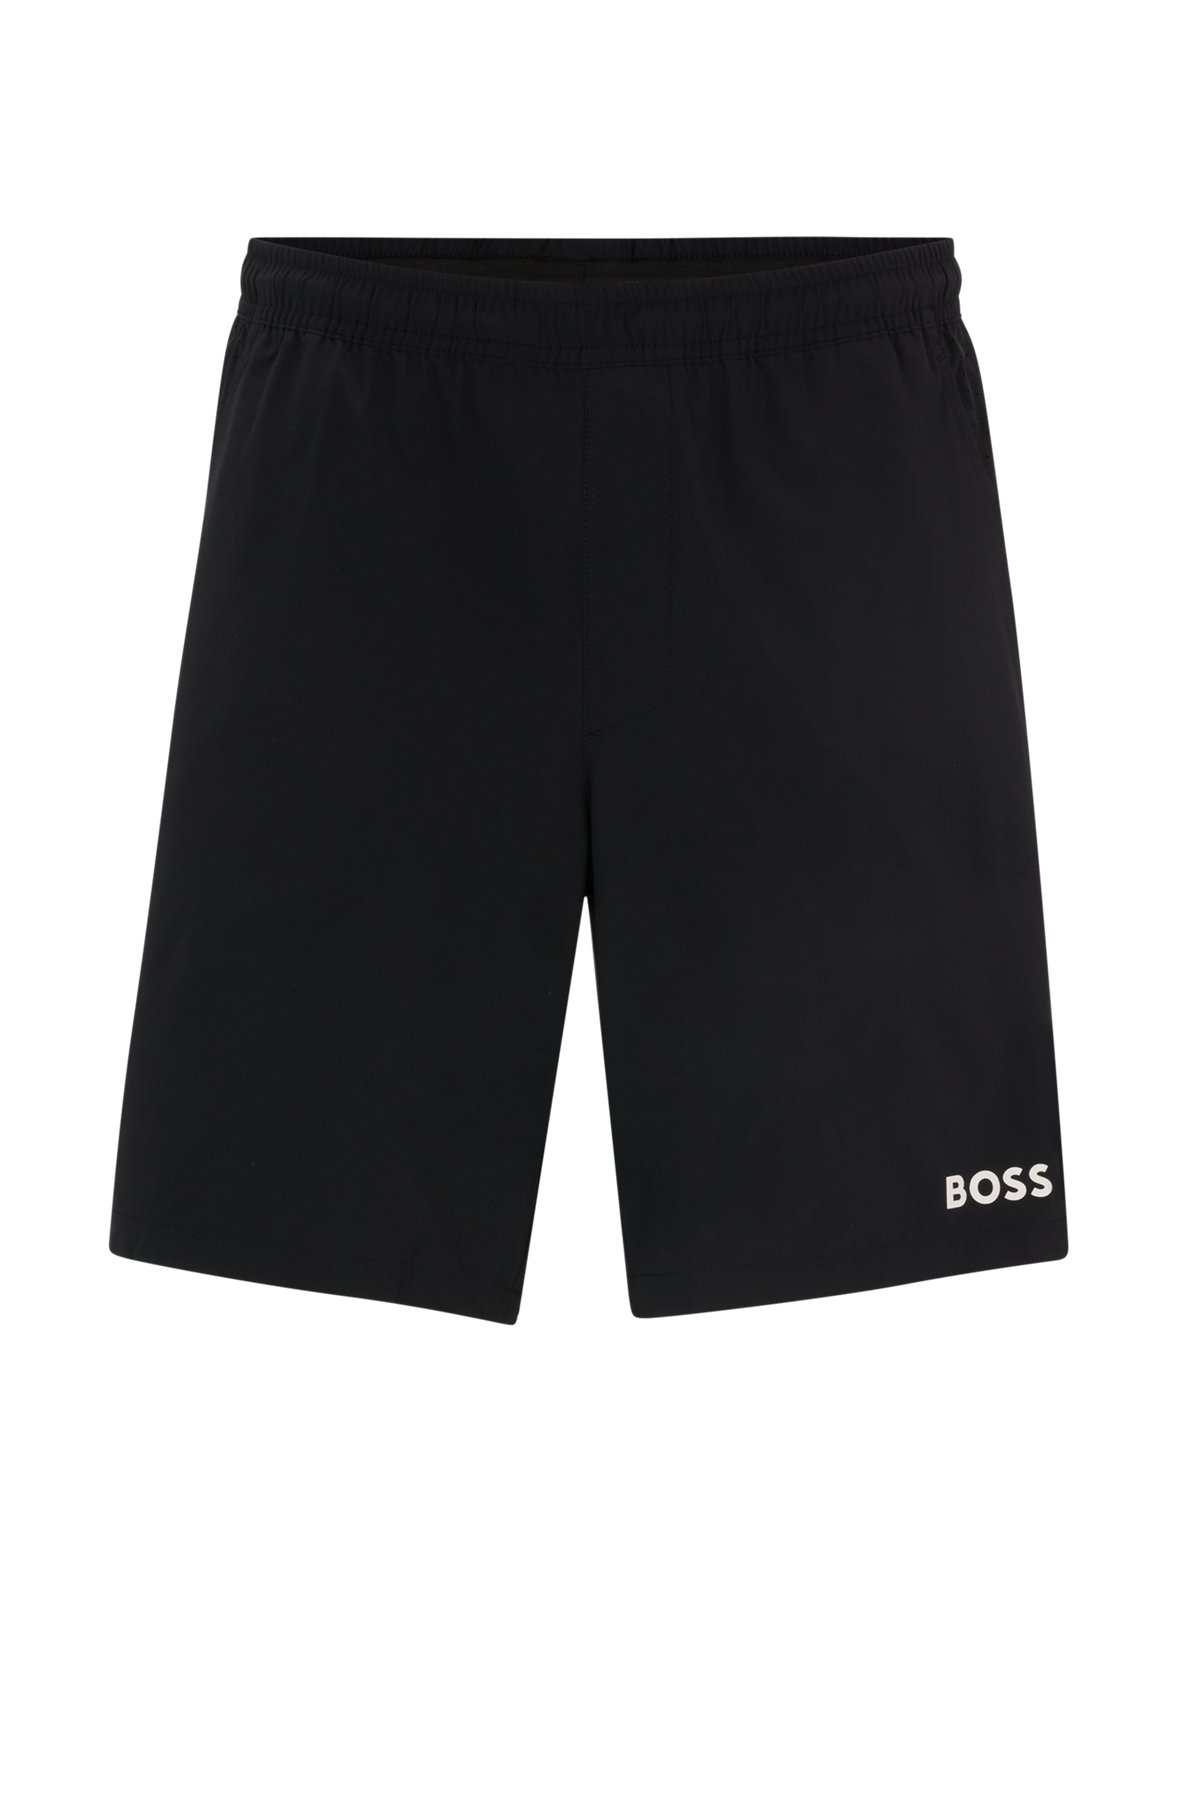 BOSS x Matteo Berrettini performance-stretch regular-fit shorts with logo detail, Black